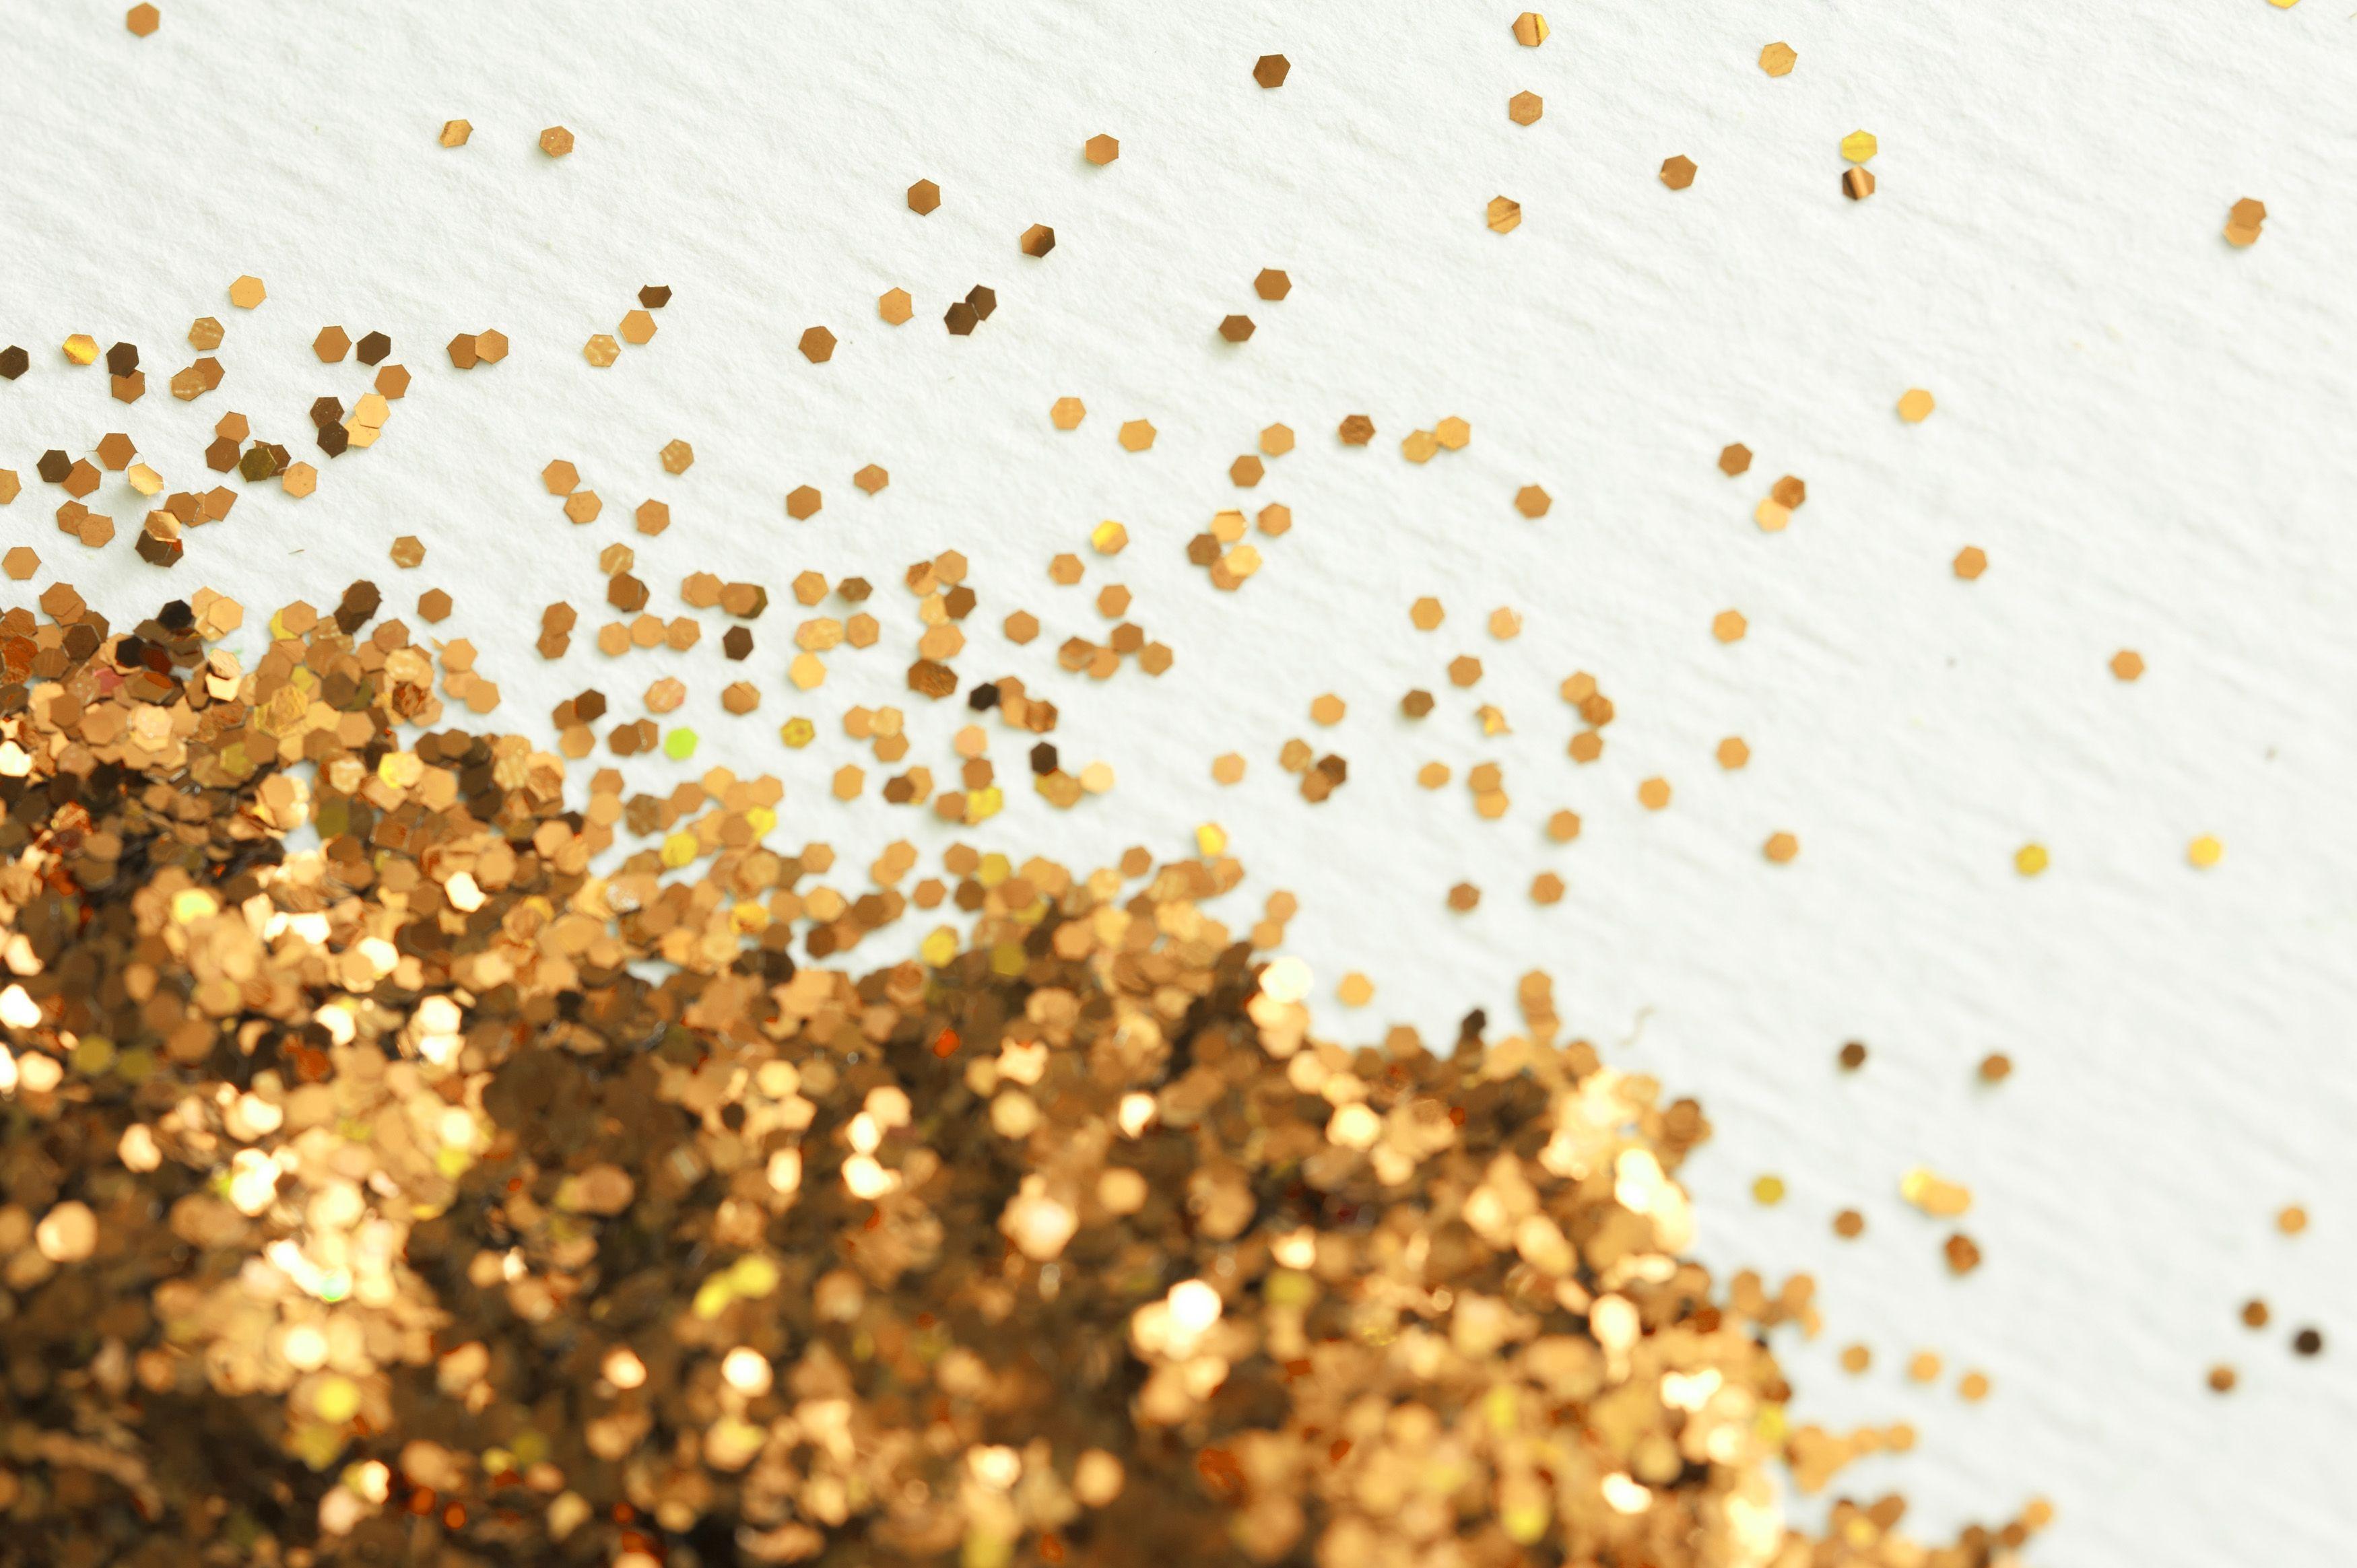 Free image of gold glitter background